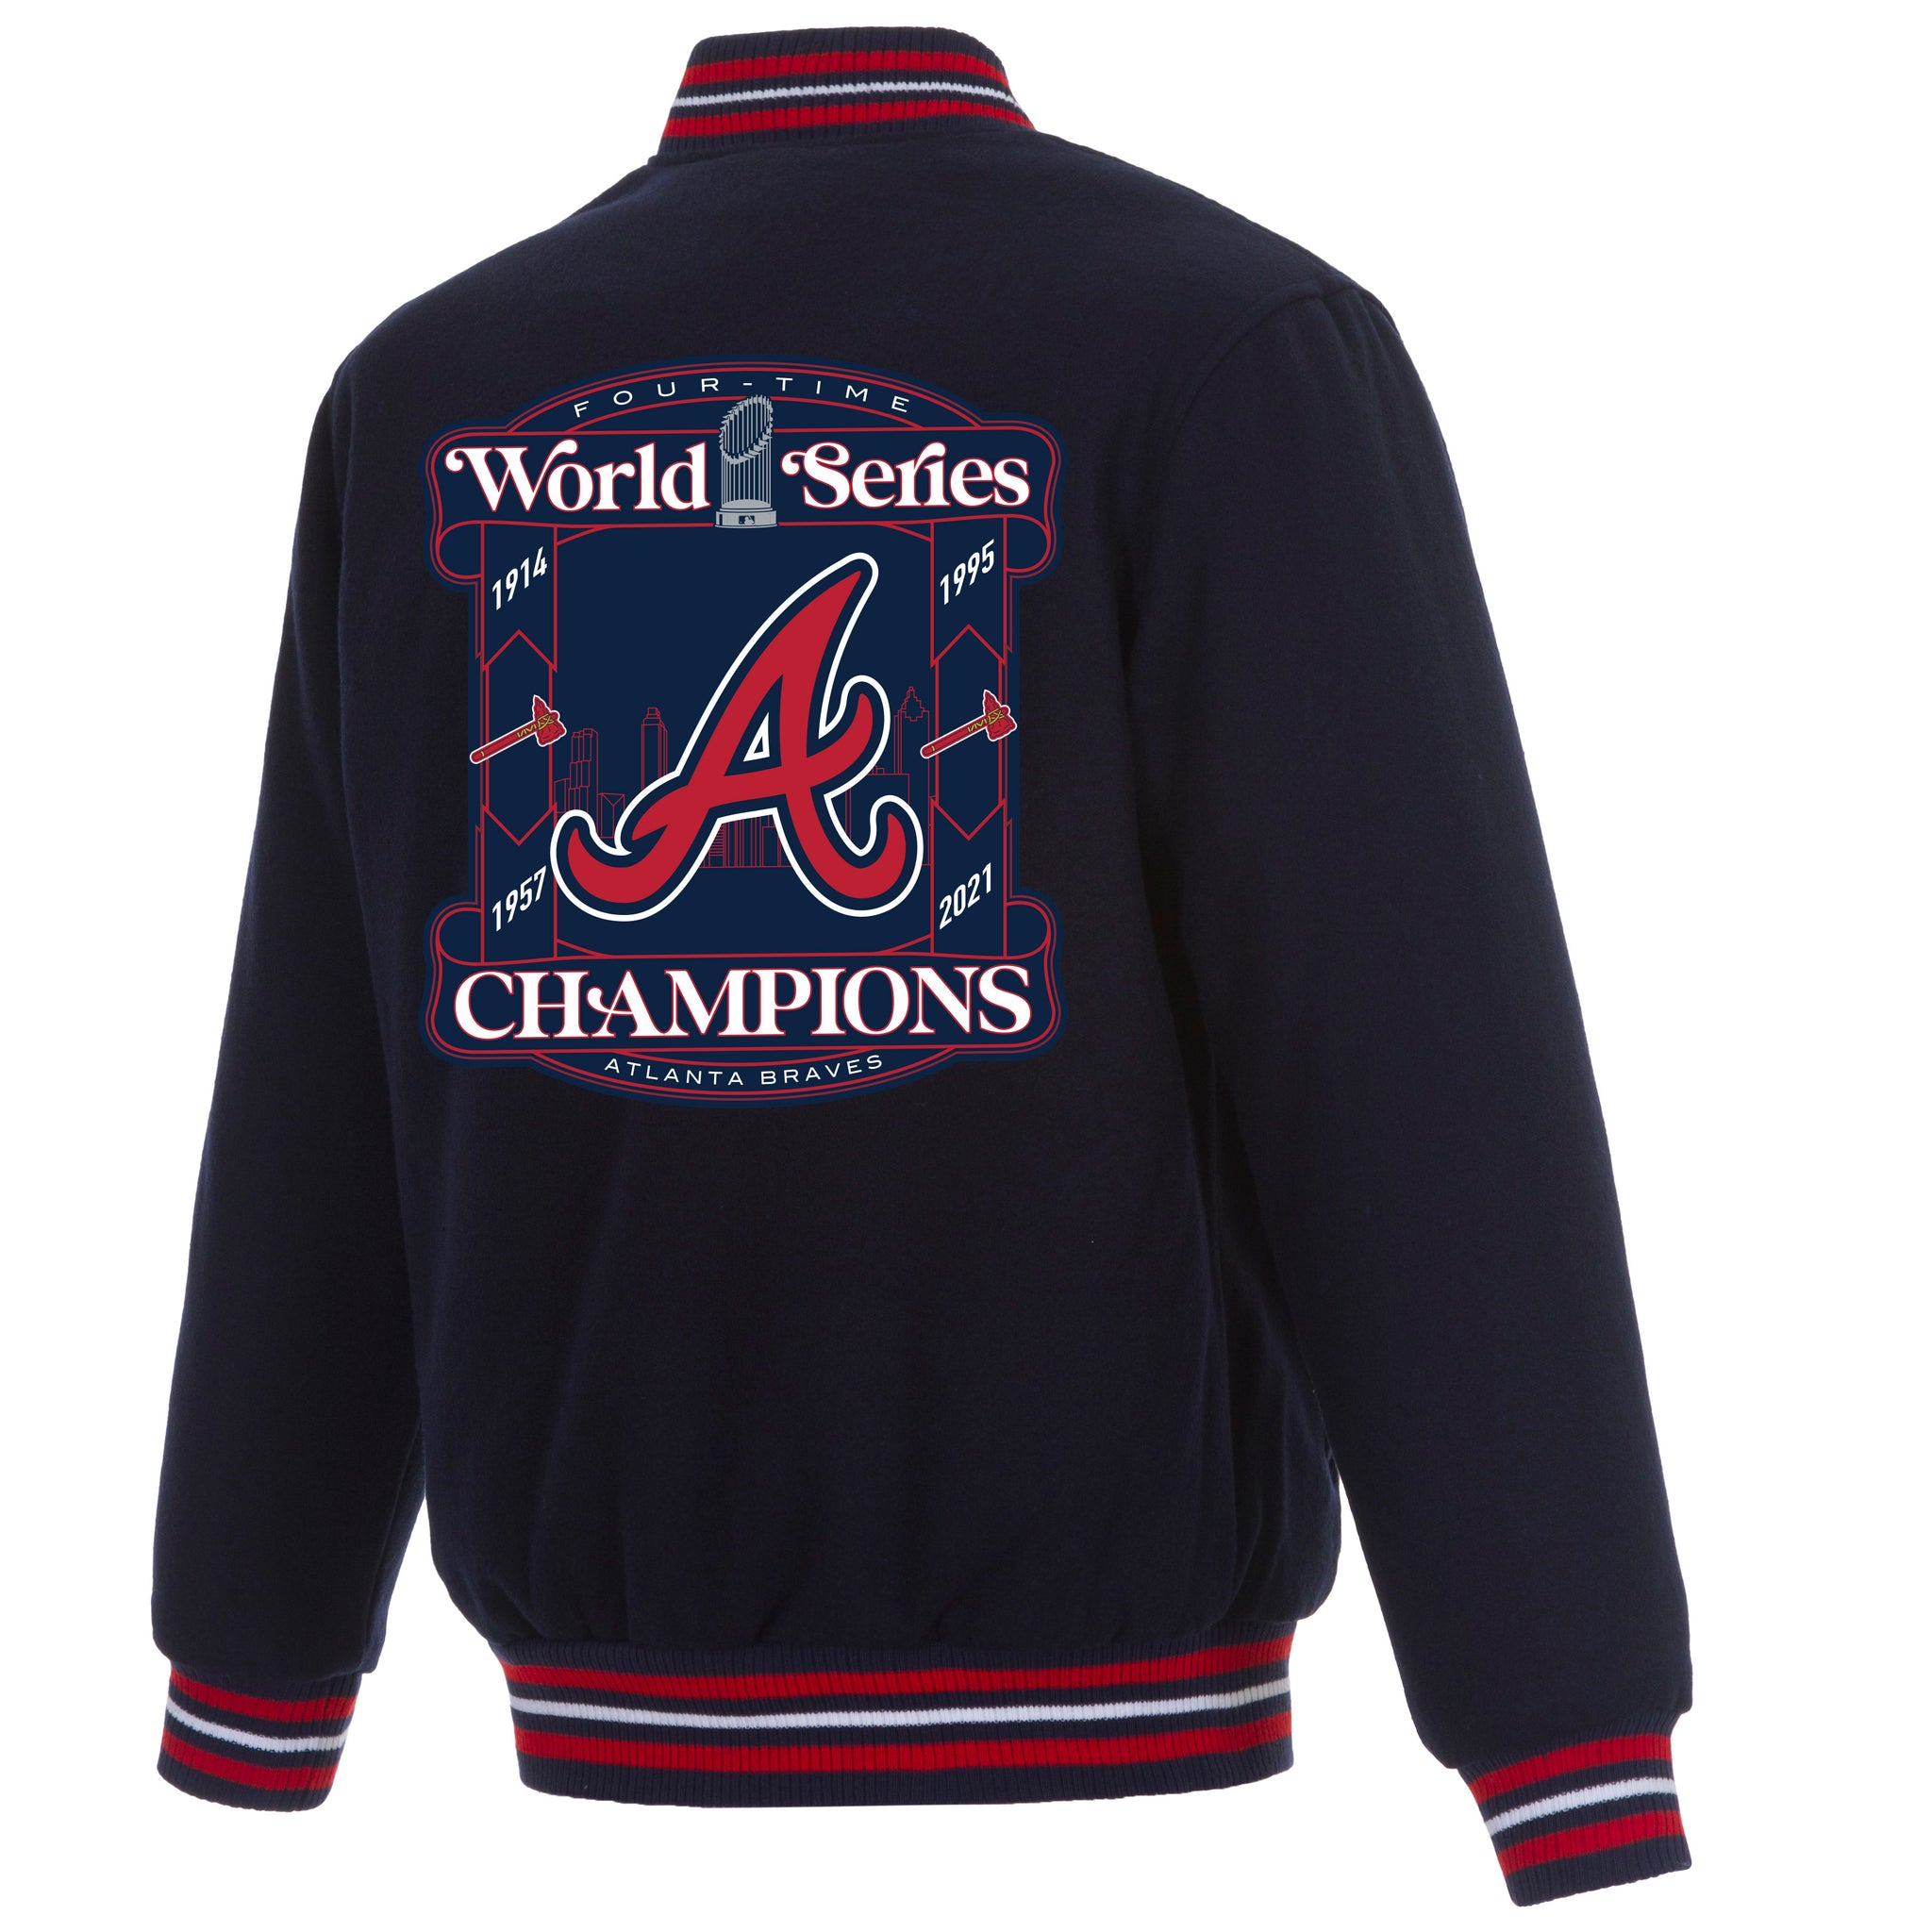 World Series Champions 1914 1957 1995 2021 Atlanta Braves Shirt